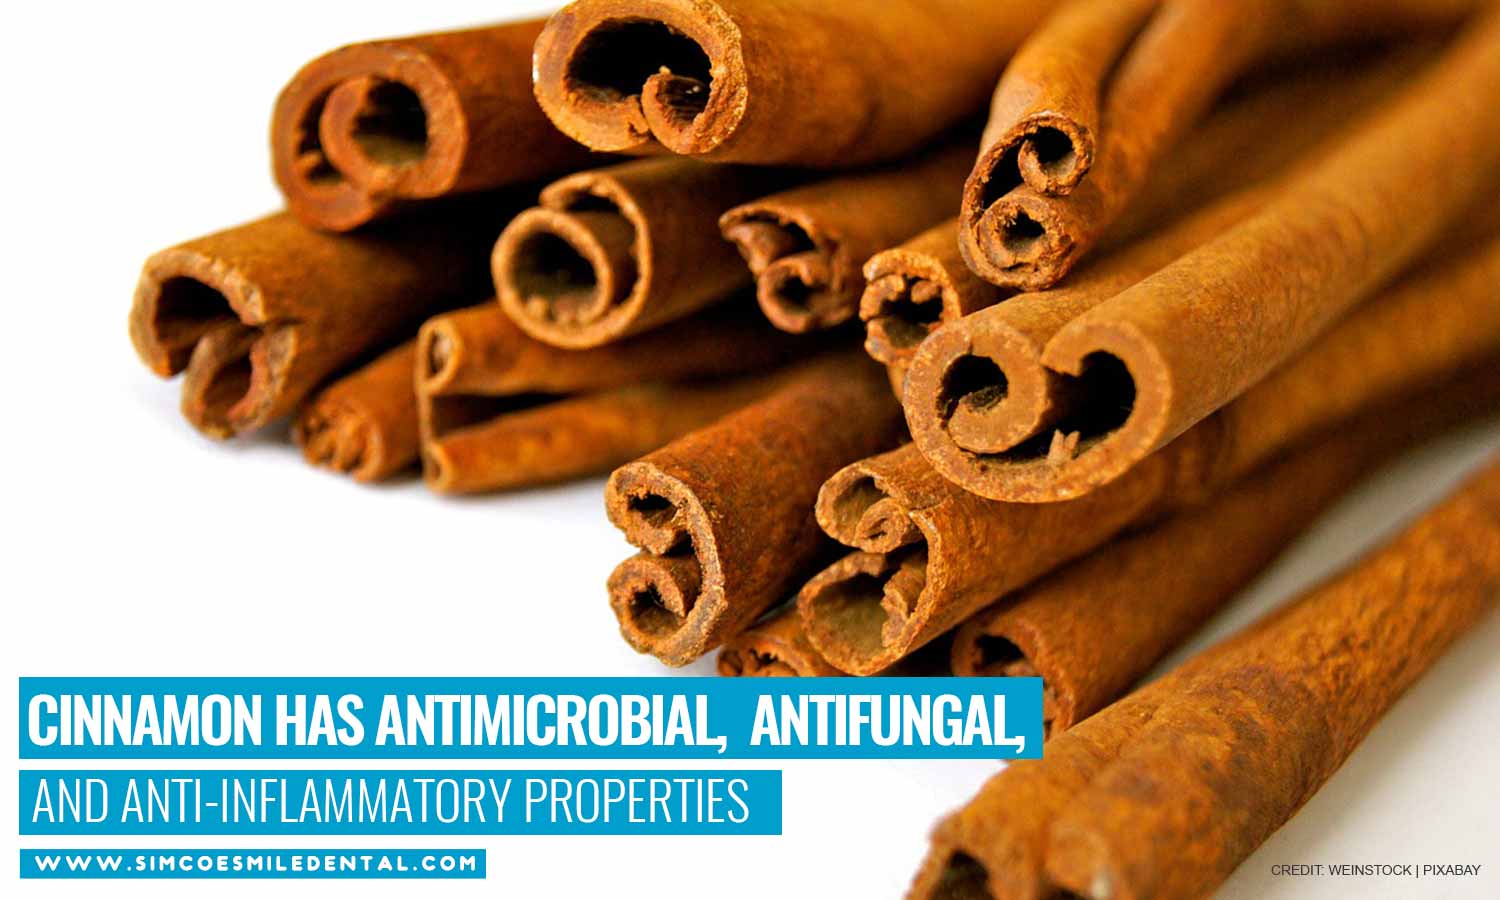 Cinnamon has antimicrobial, antifungal, and anti-inflammatory properties